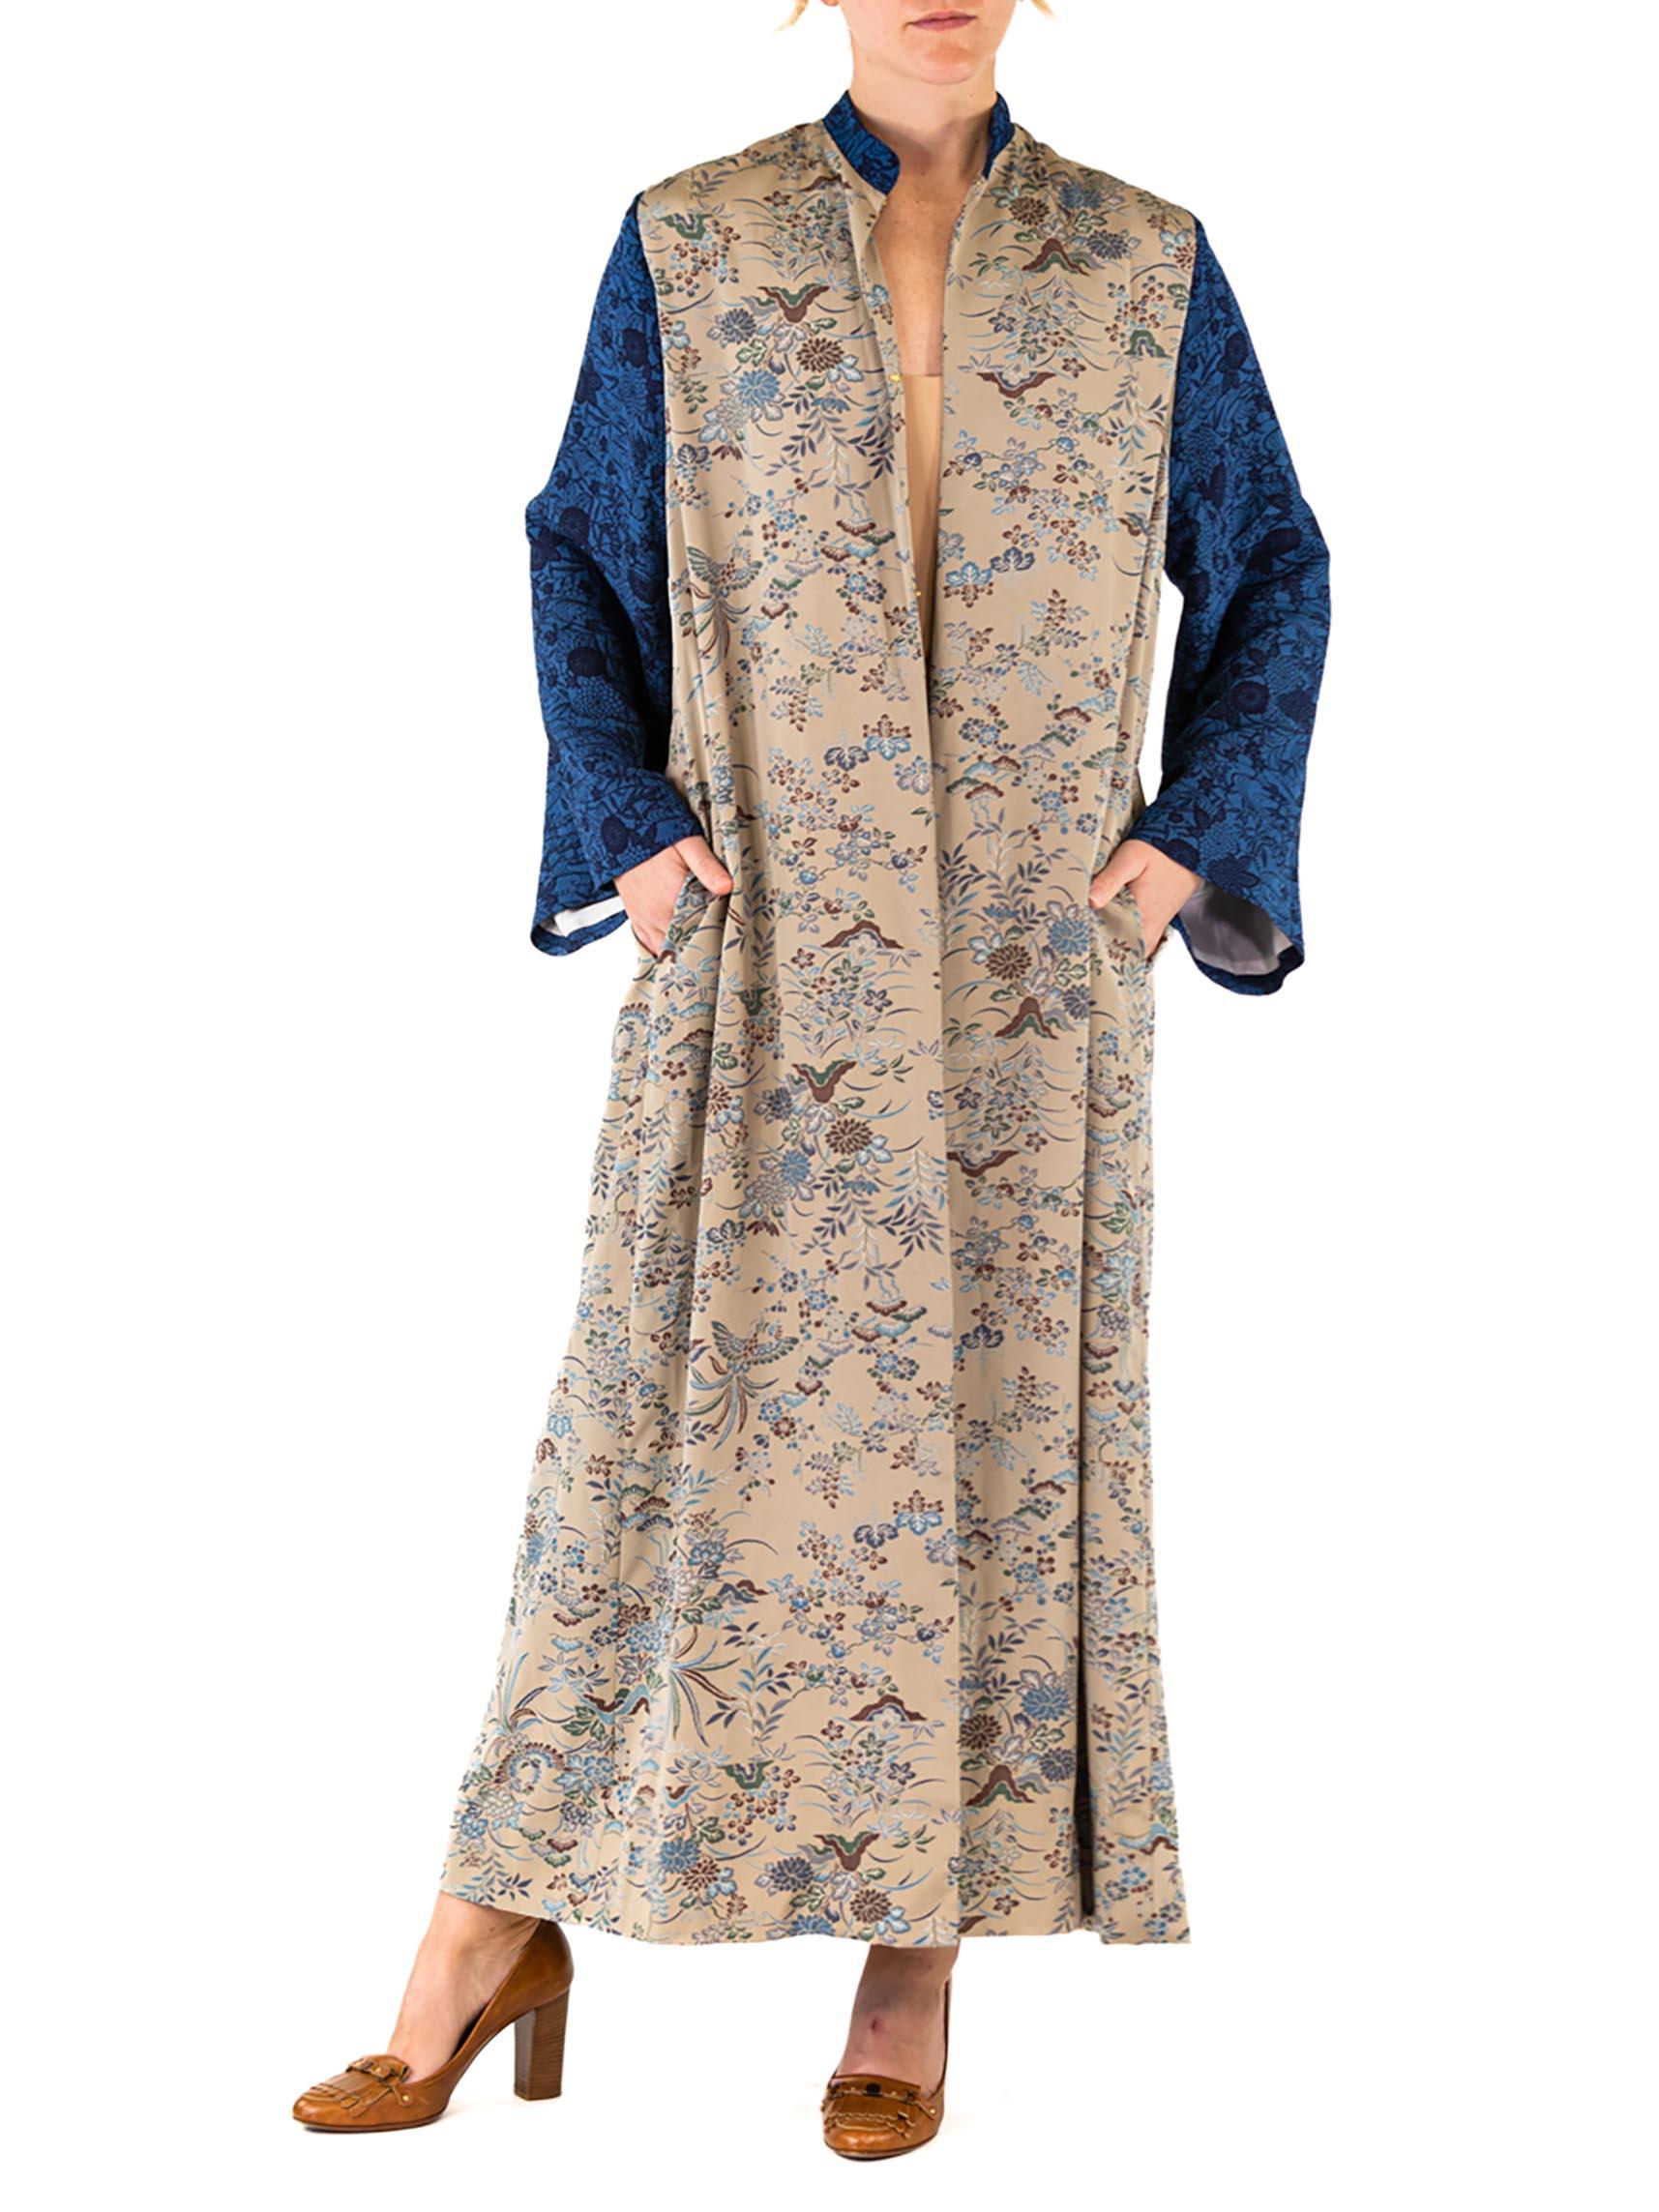 Women's MORPHEW COLLECTION Ecru Japanese Kimono Silk Royal Blue Sleeves Duster For Sale